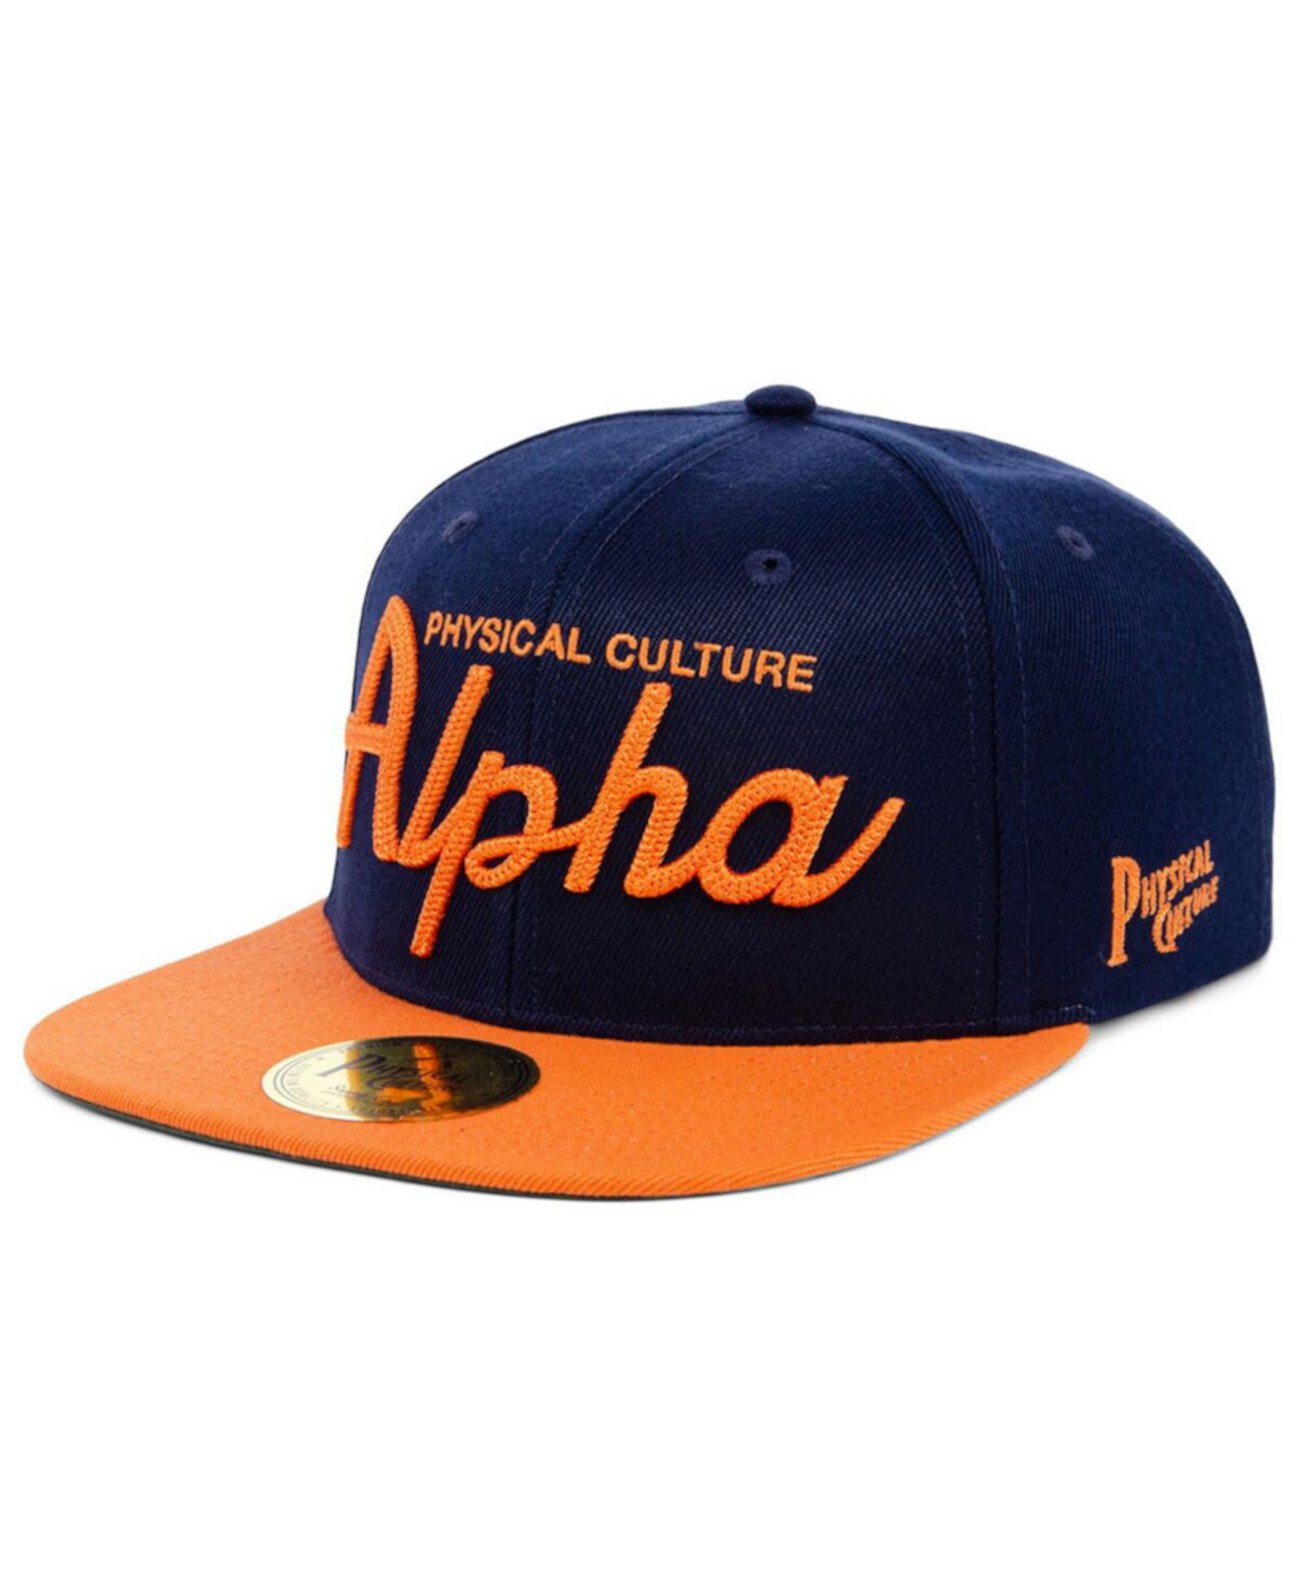 Мужская темно-синяя регулируемая шляпа Alpha Physical Culture Club Black Fives Snapback Physical Culture